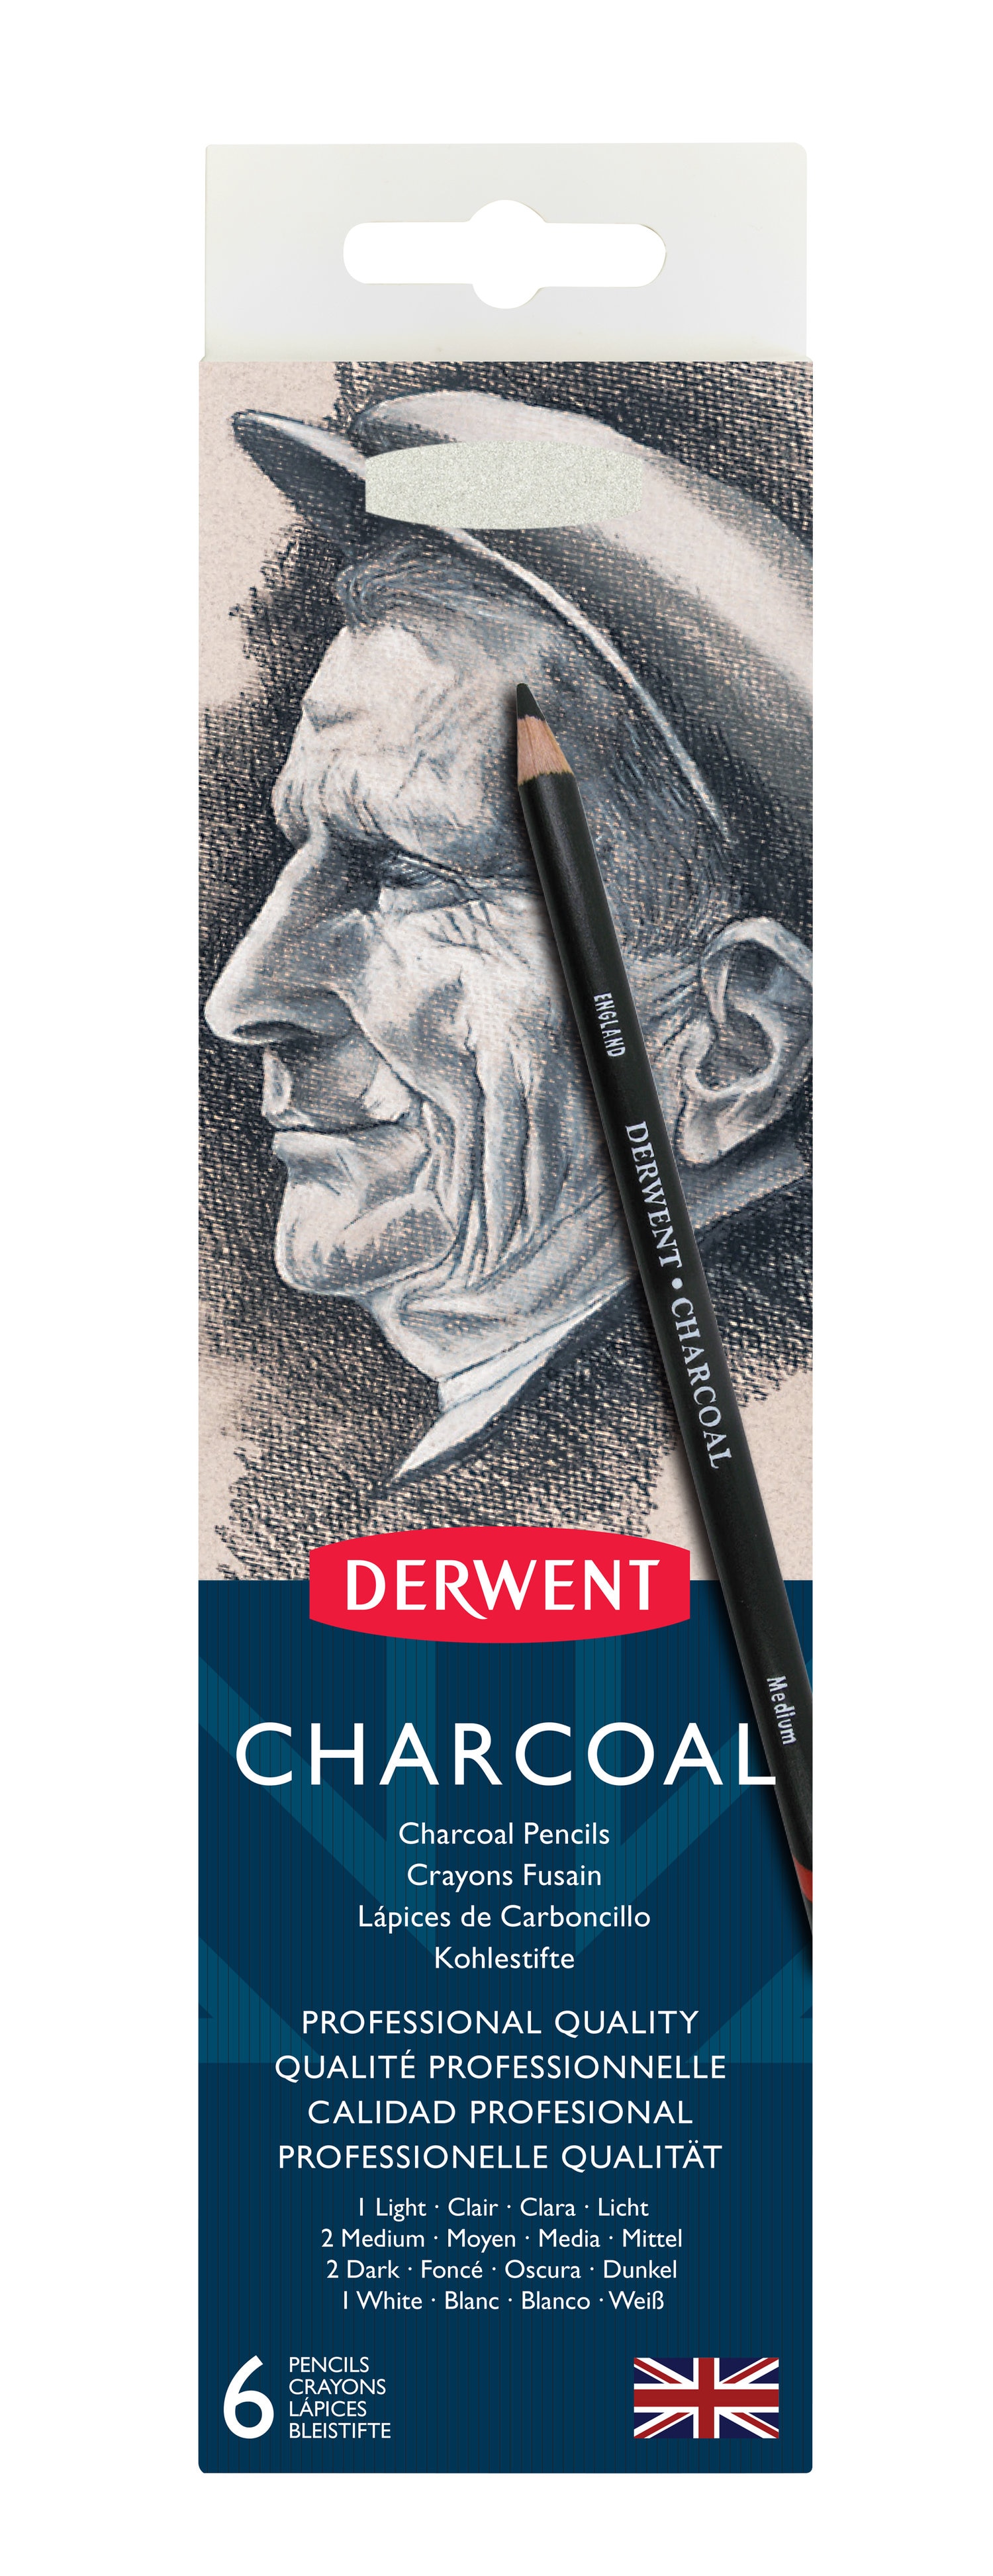 Derwent Charcoal Tin Set